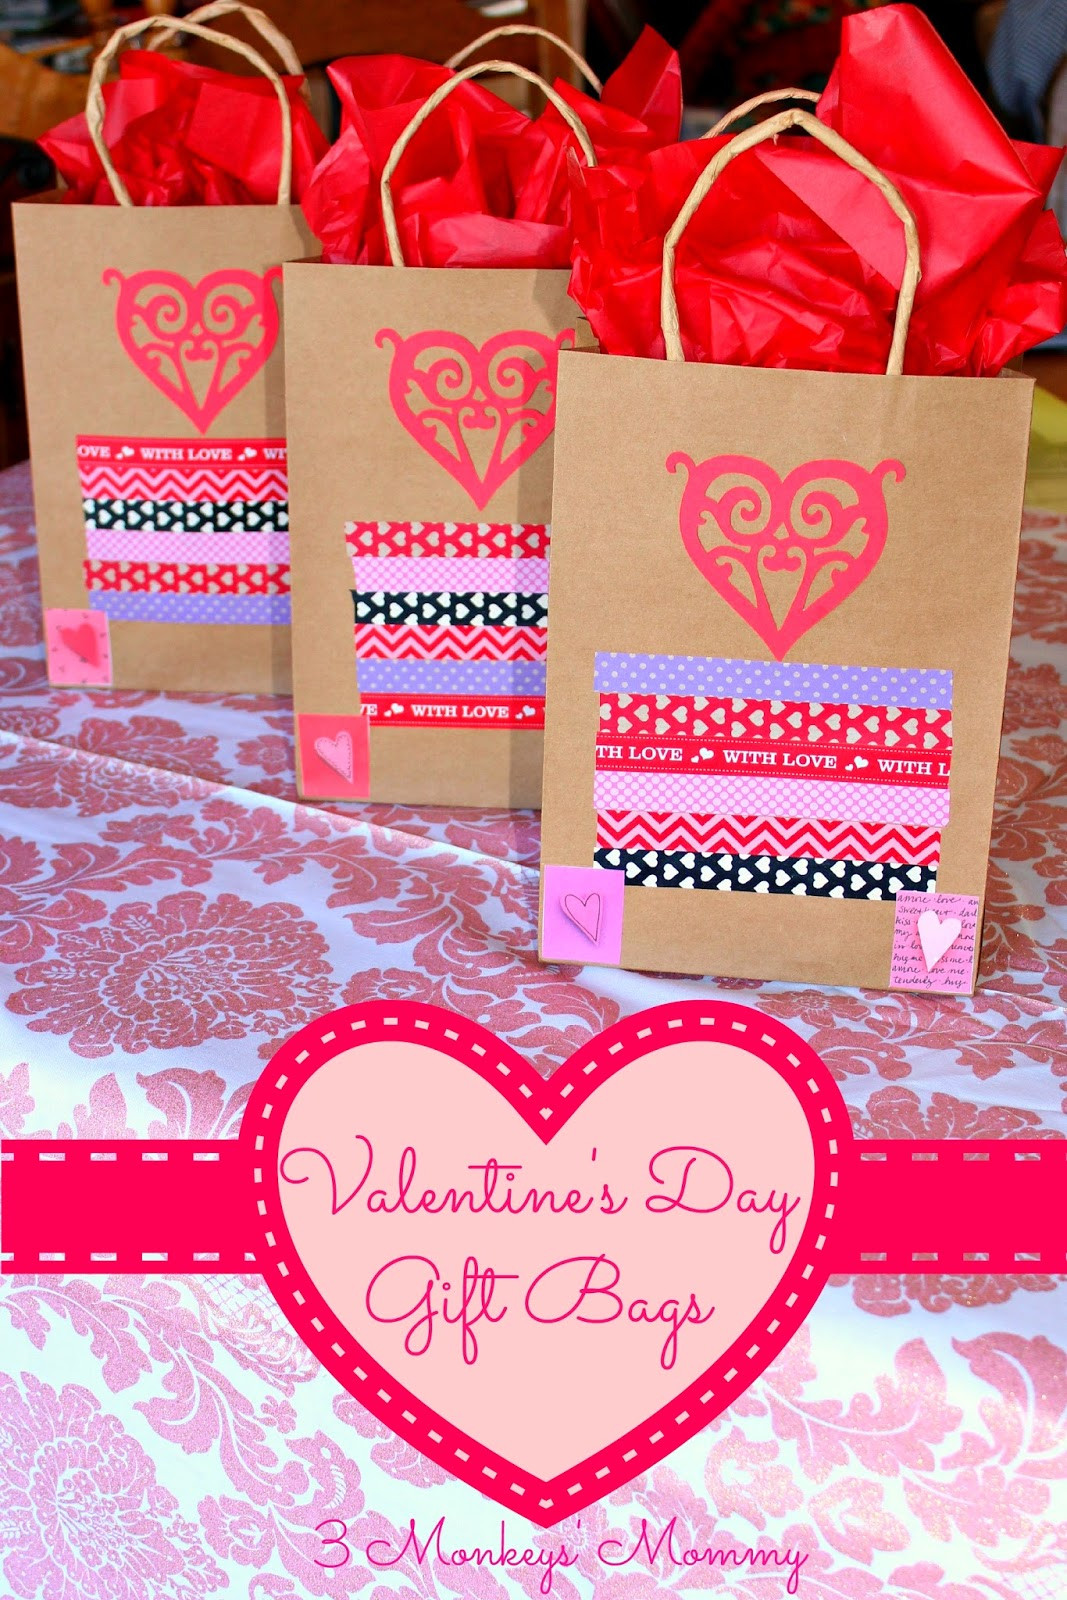 Valentine'S Day Treats &amp; Diy Gift Ideas
 3 Monkeys Mommy Valentine s Day Treats DIY Gift Bags